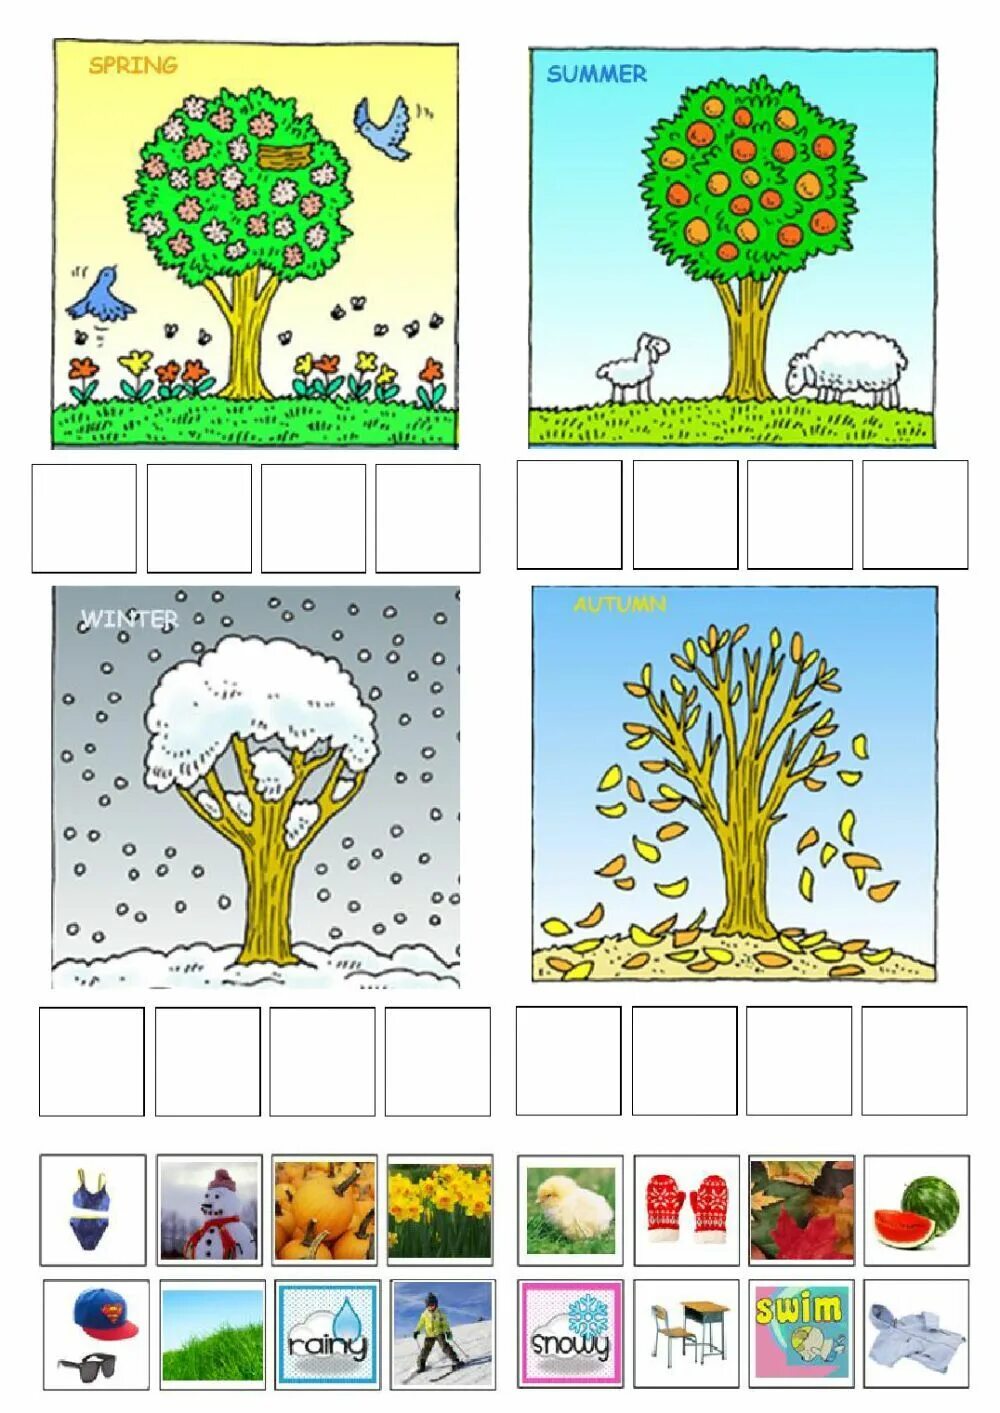 Seasons tasks. Времена года Worksheets. Seasons for Kids задания. Seasons tasks for Kids. Seasons activities for Kids.